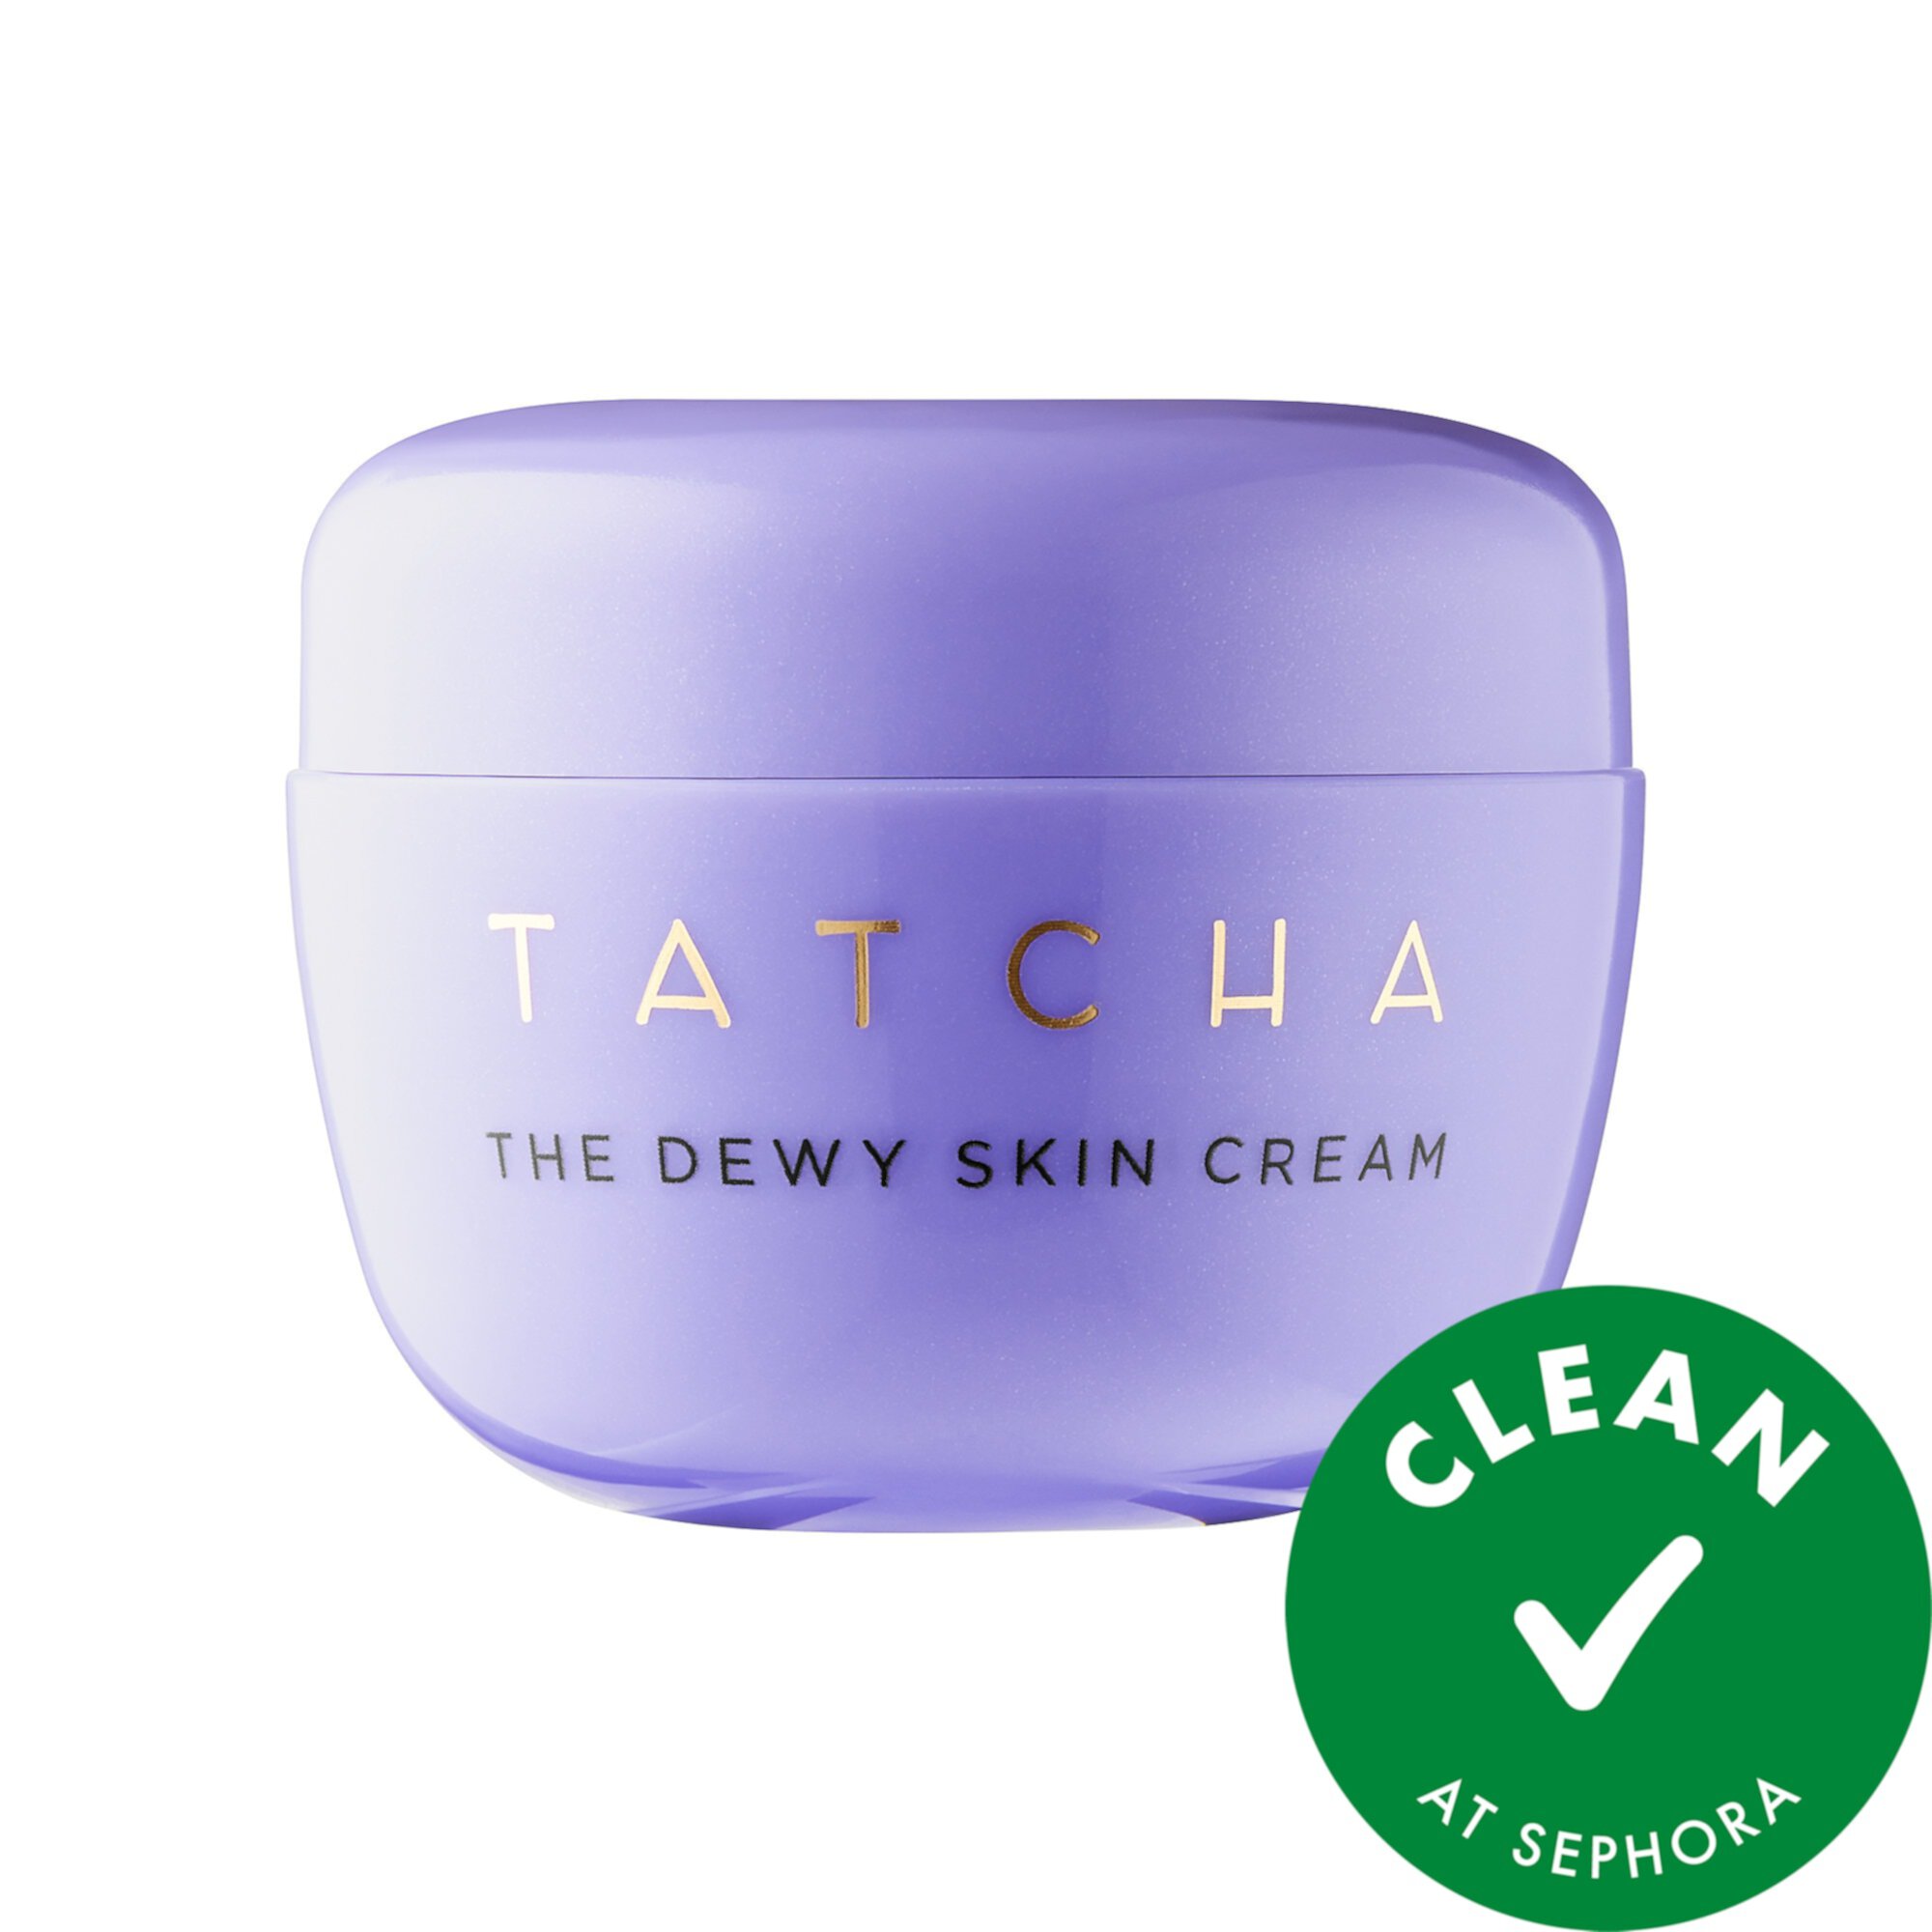 Mini The Dewy Skin Cream Разглаживающий и увлажняющий увлажняющий крем Tatcha